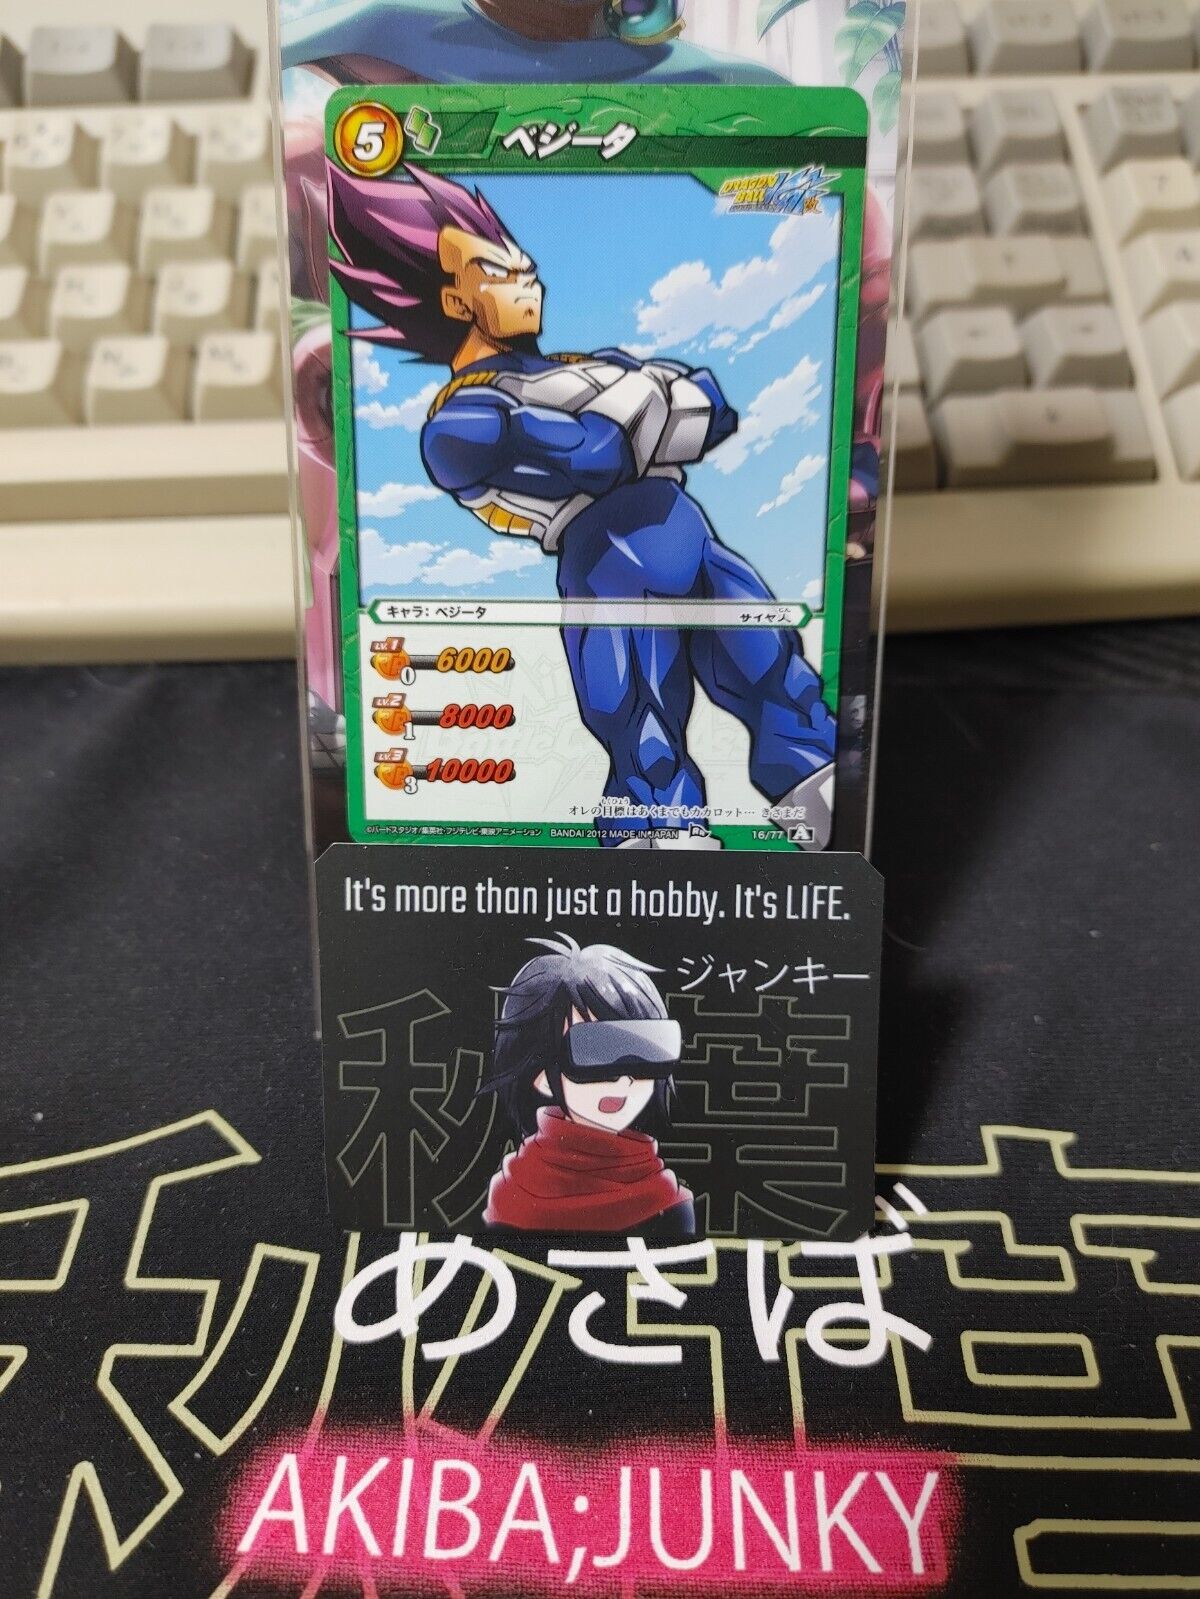 Dragon Ball Z Bandai Carddass Miracle Battle Vegeta 16/77 Japanese Retro